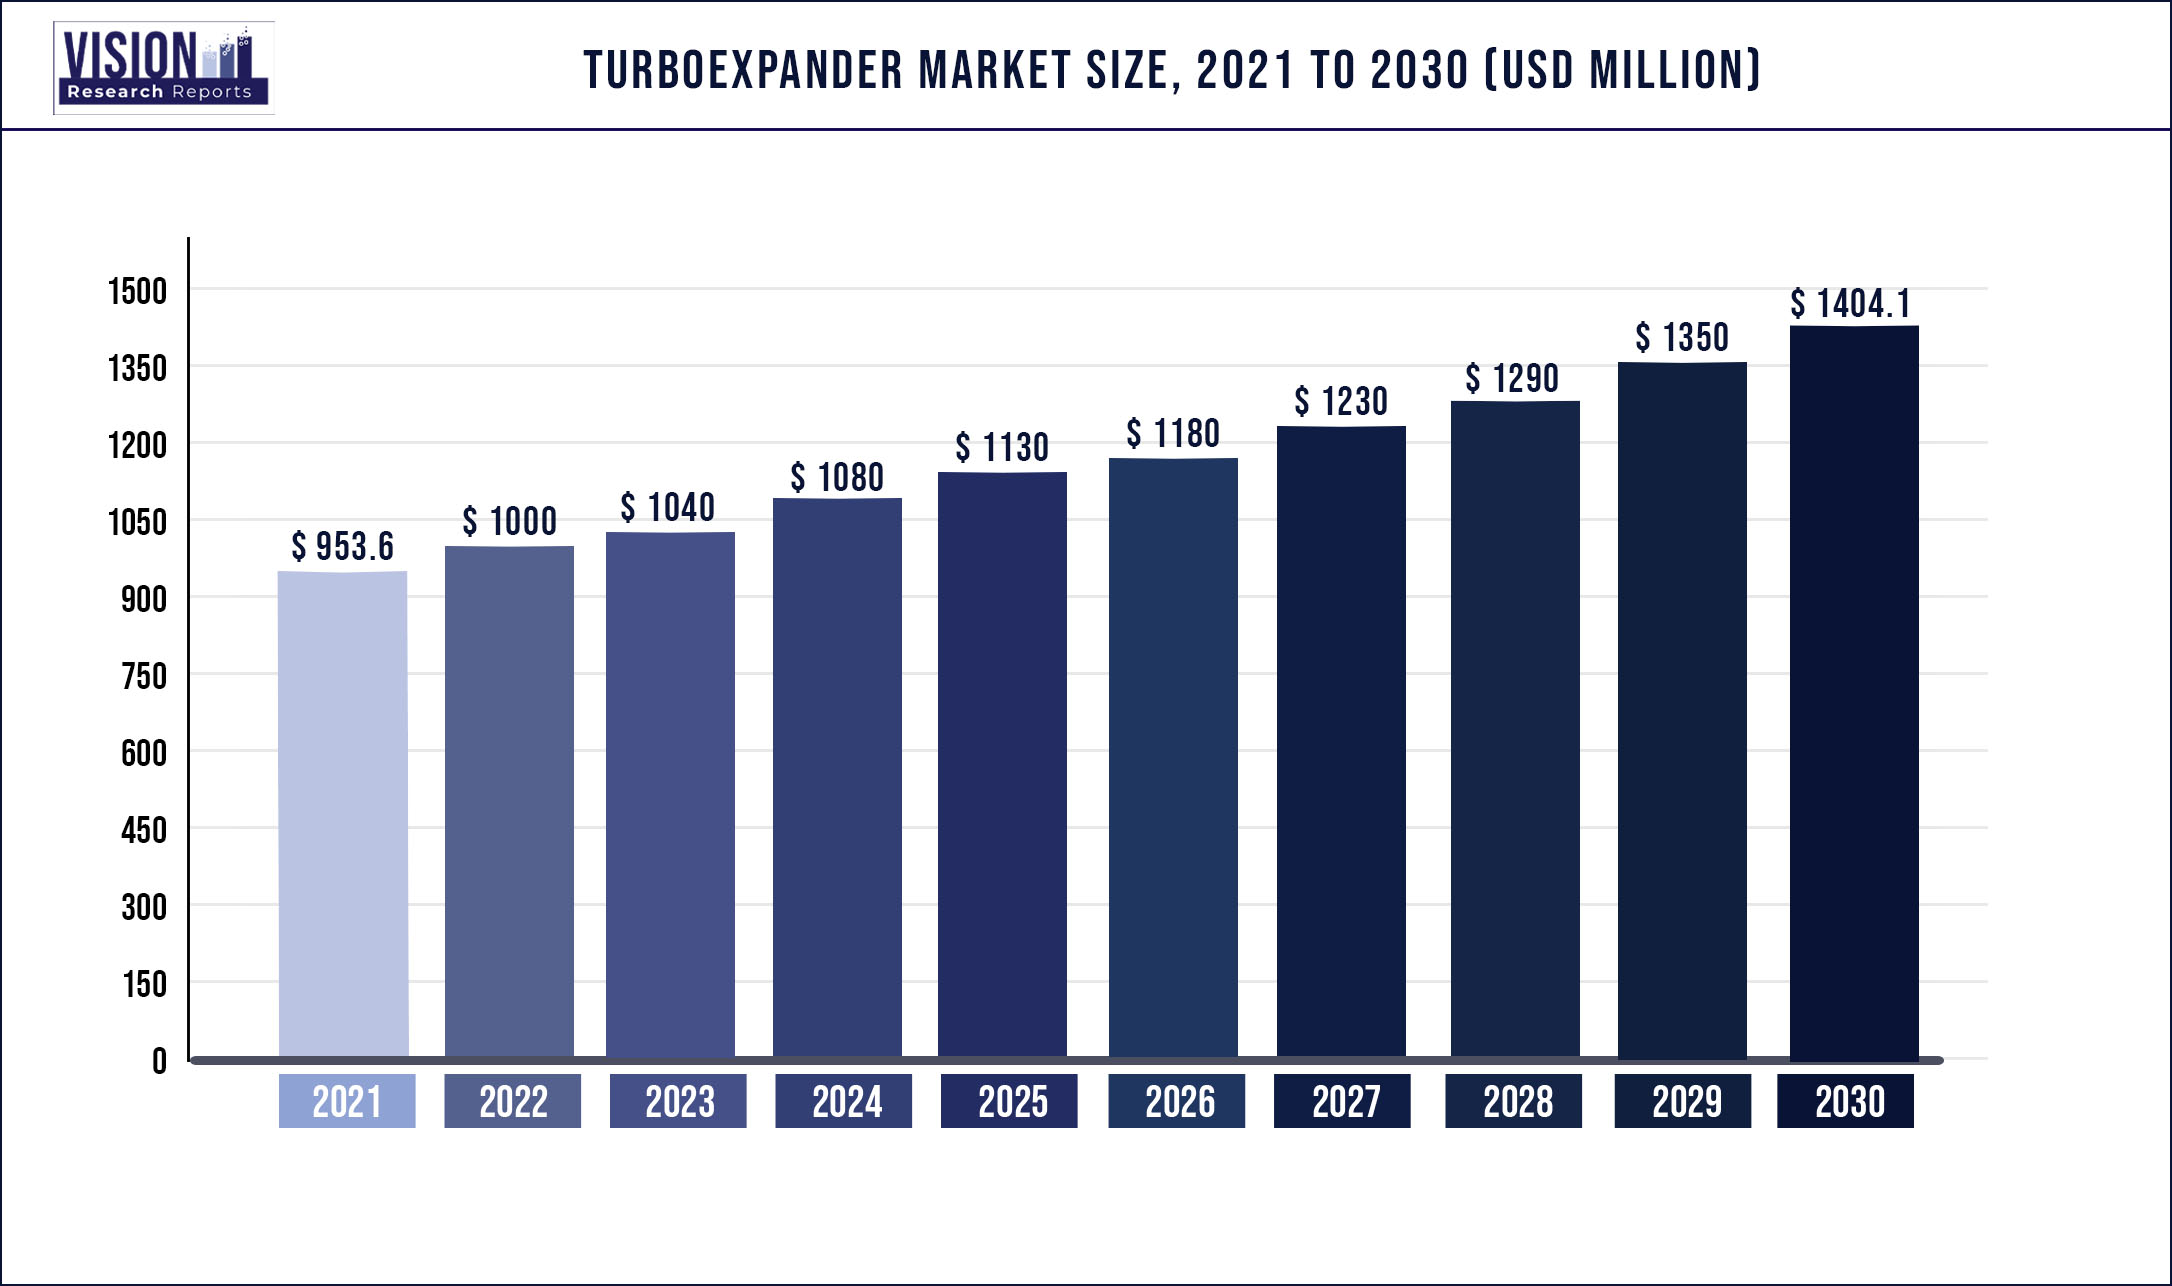 Turboexpander Market Size 2021 to 2030